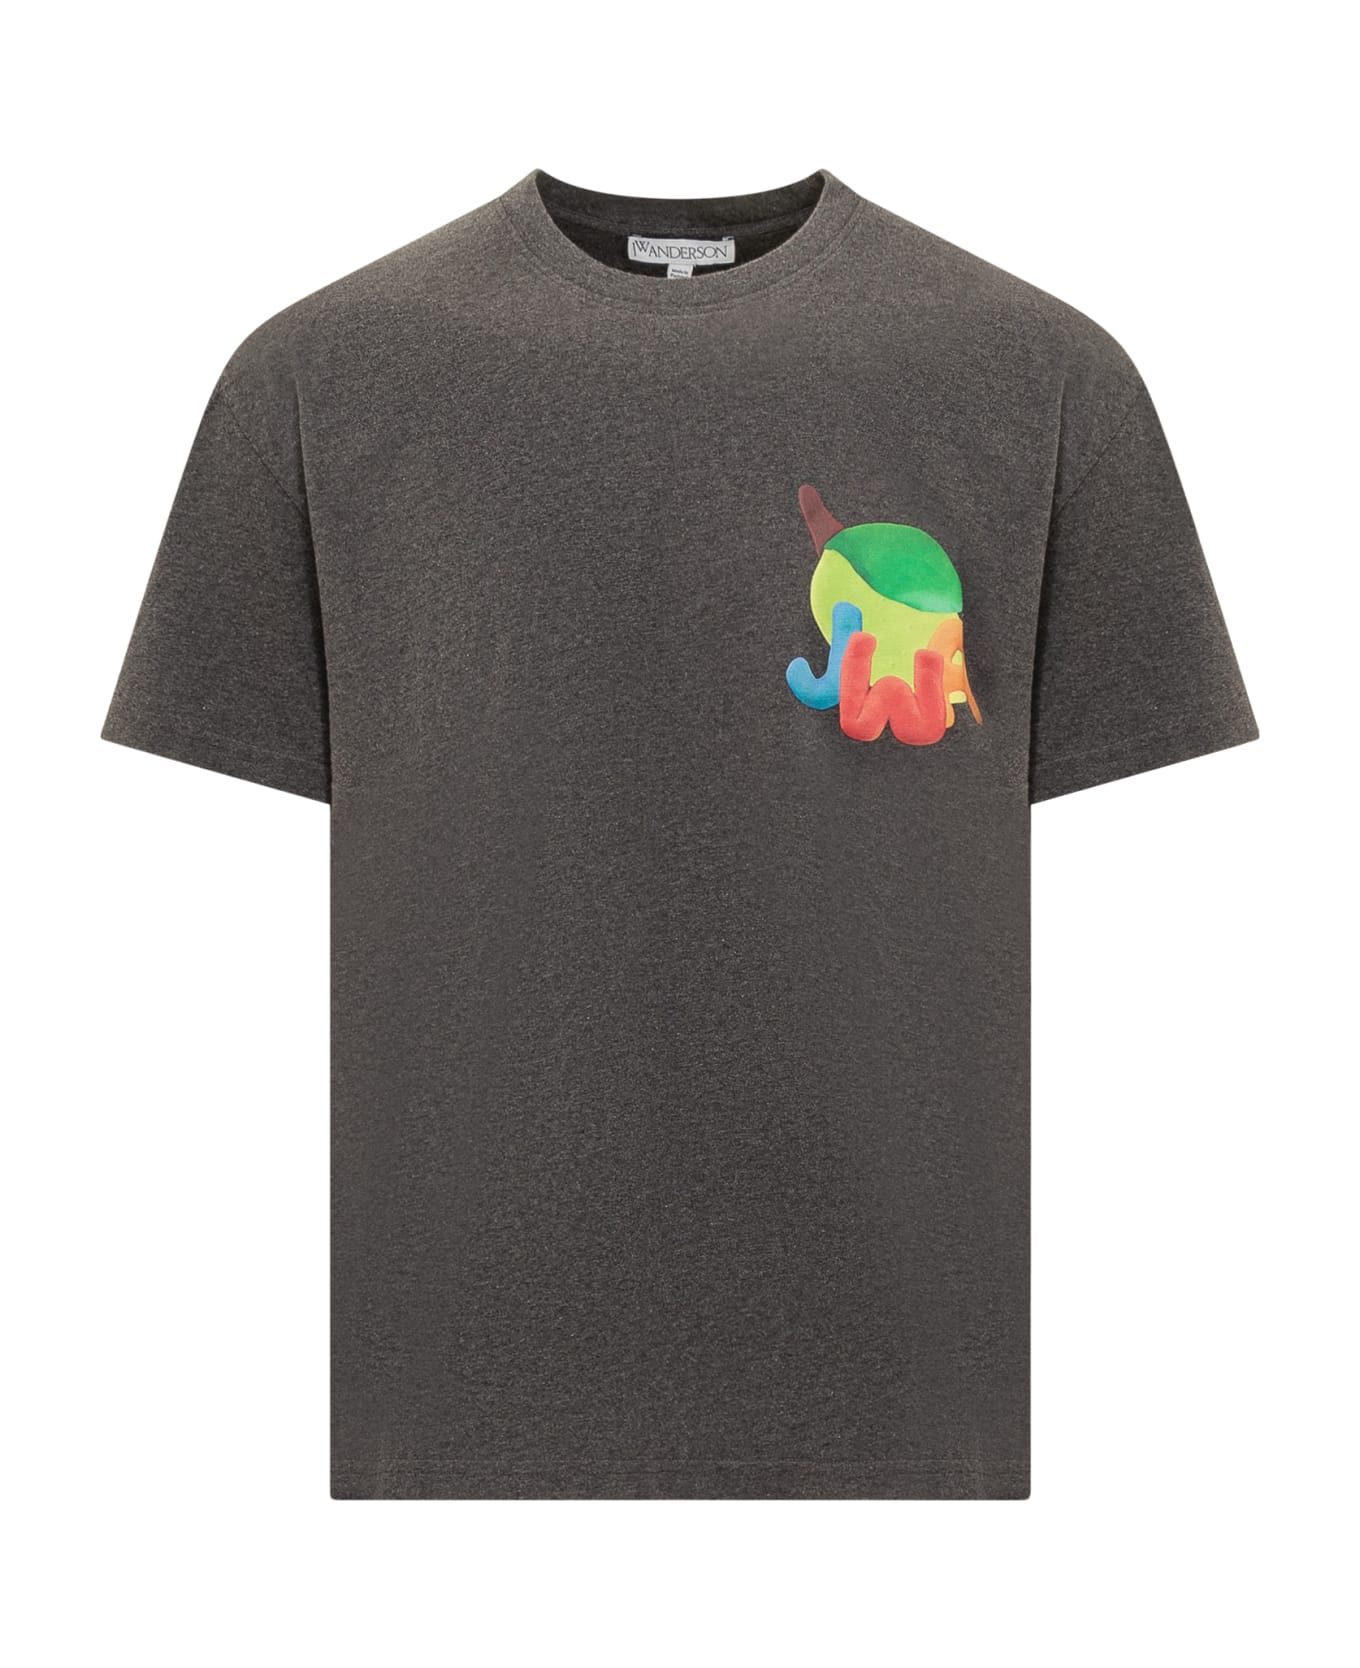 J.W. Anderson Lime Print Jwa T-shirt - CHARCOAL MELANGE シャツ